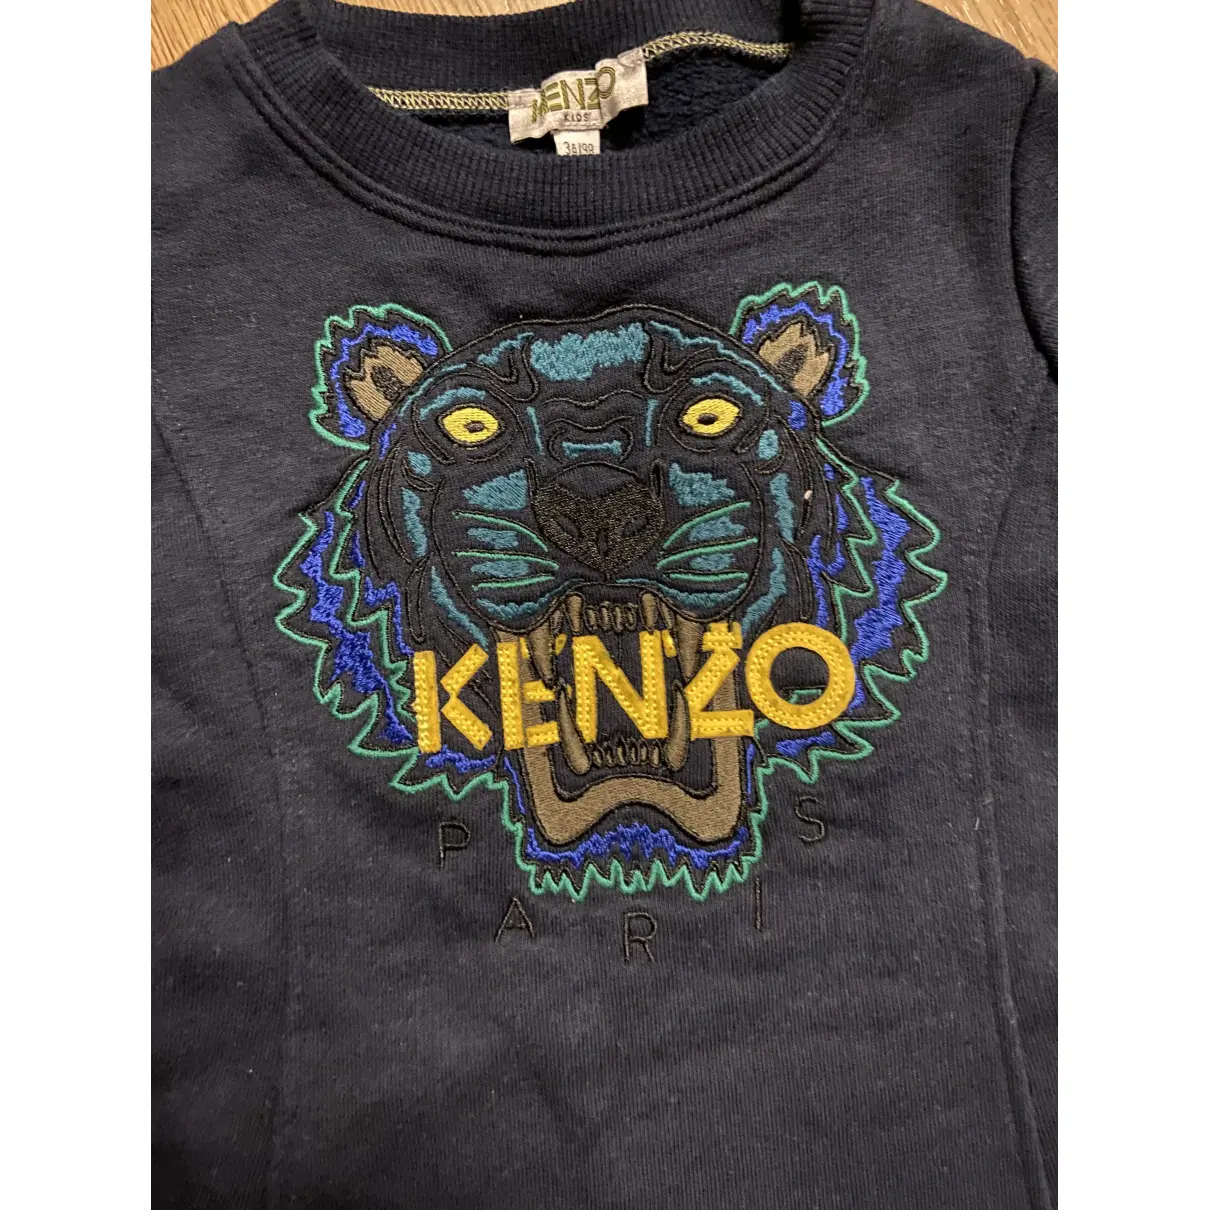 Buy Kenzo Tiger mini dress online